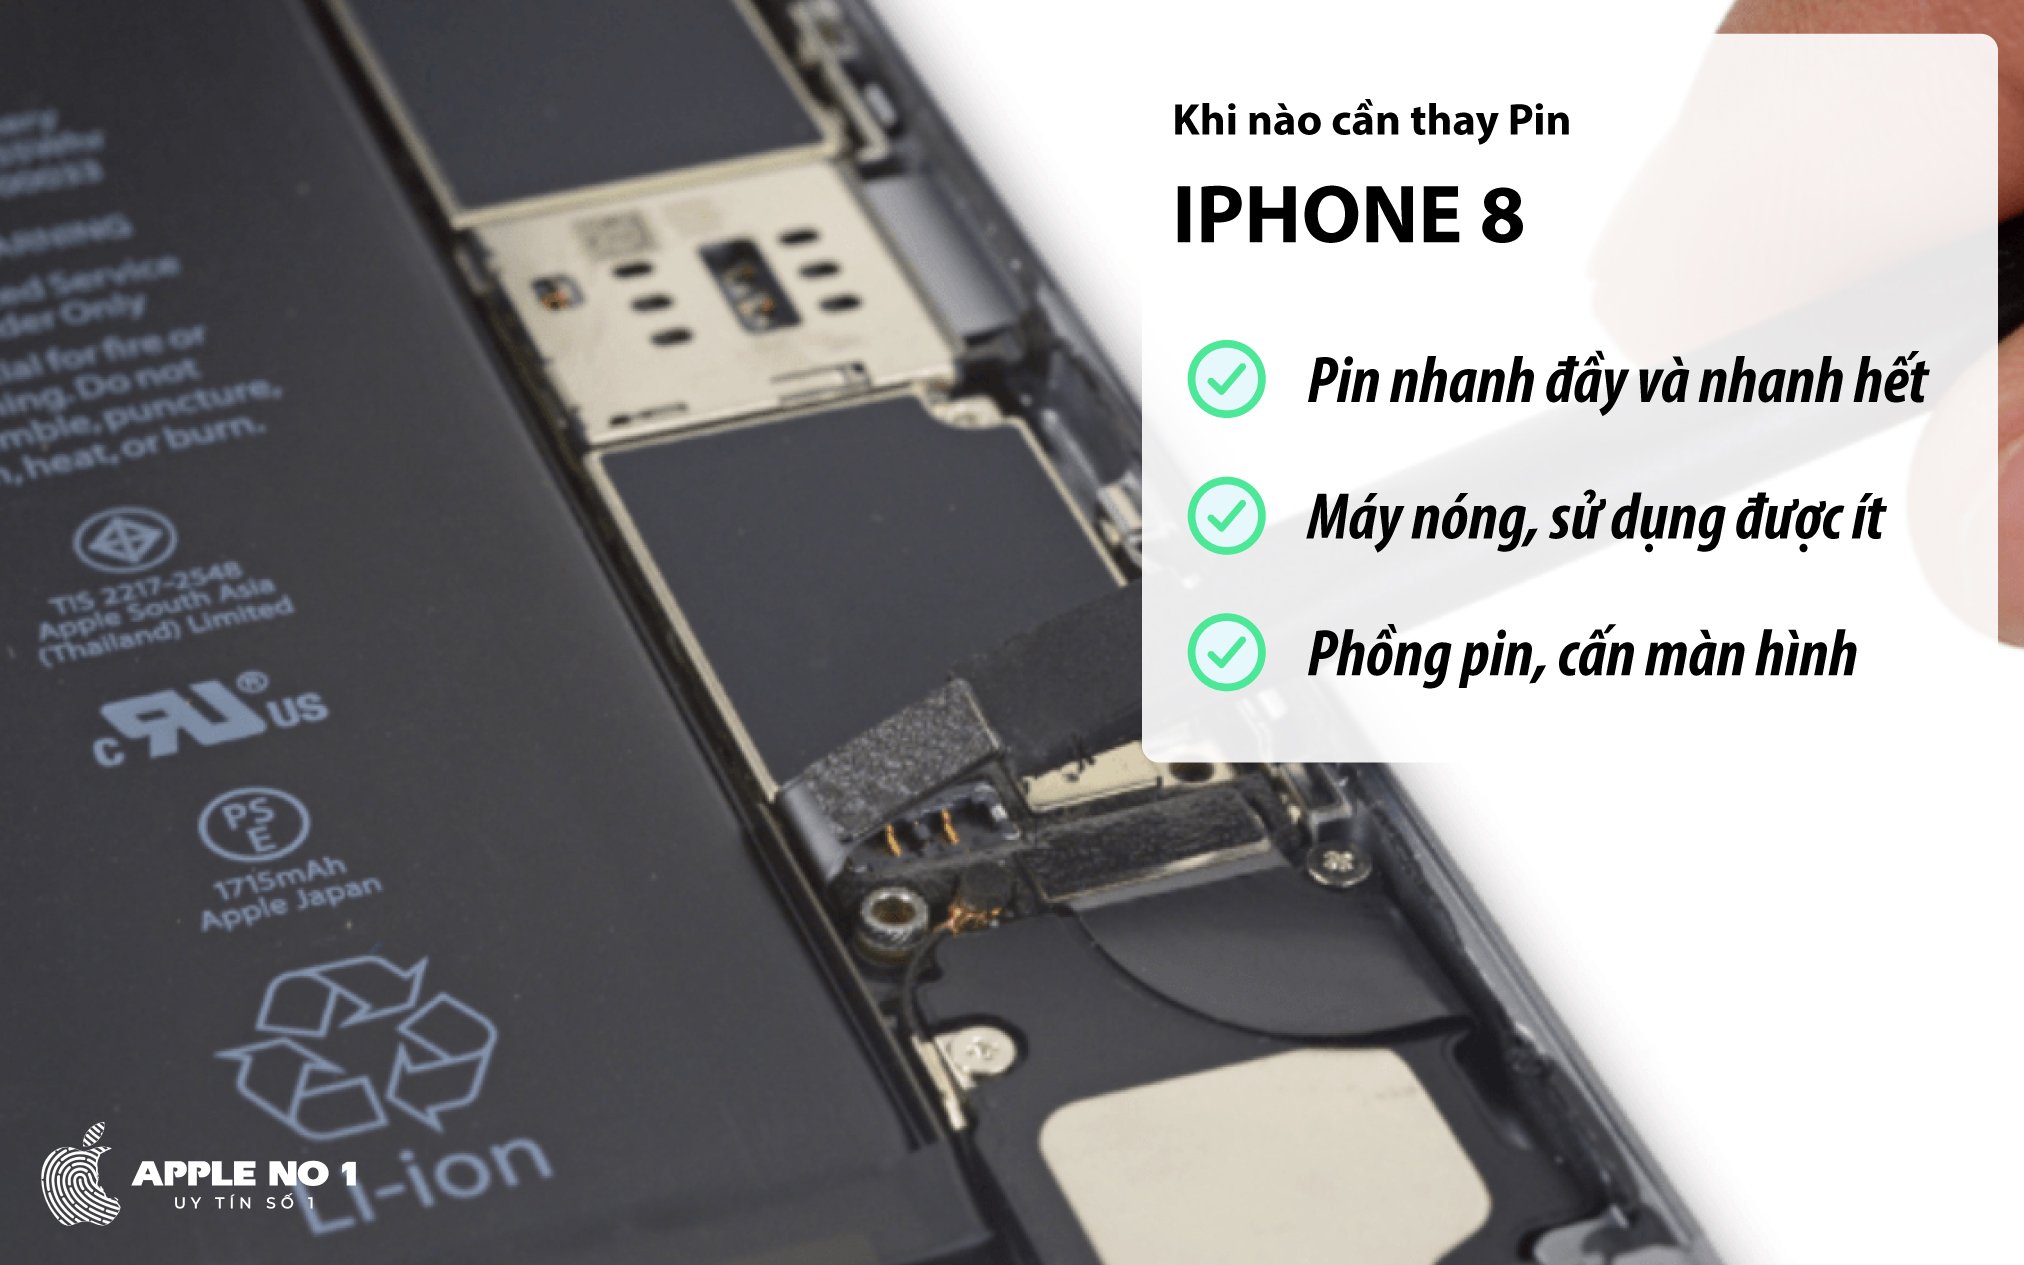 Khi nao can thay pin iPhone 8